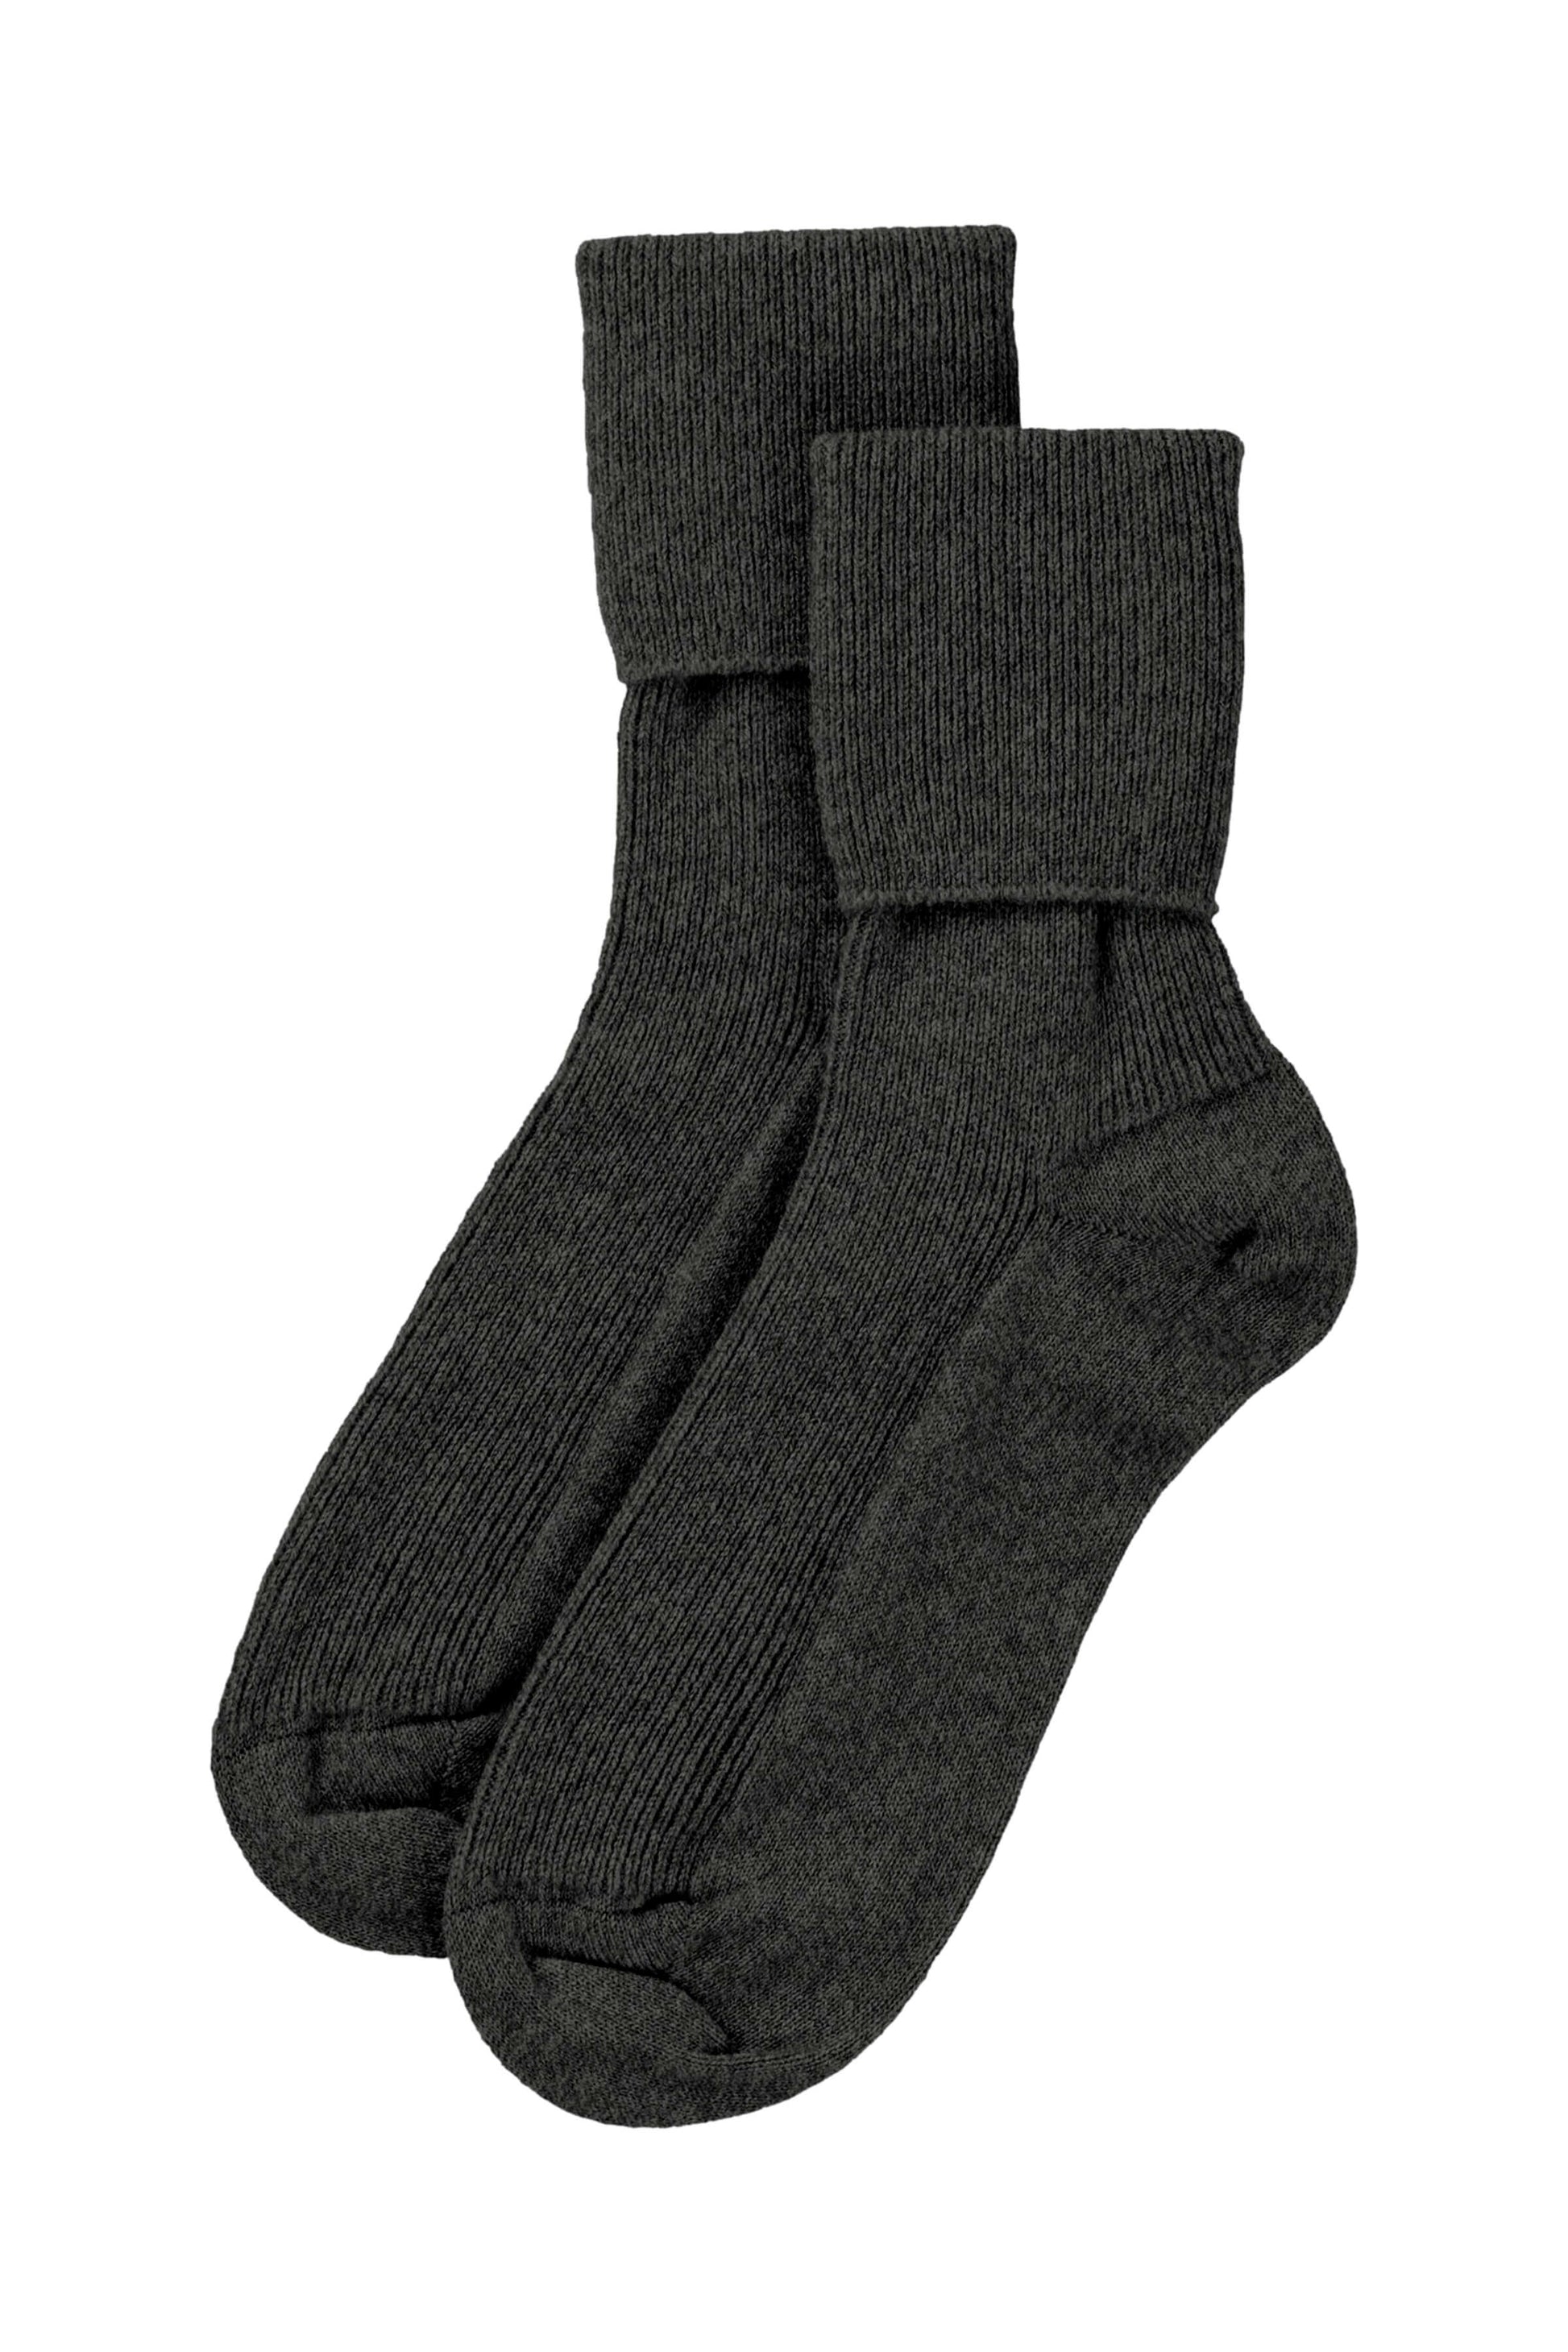 Johnstons of Elgin’s mid grey Women's Cashmere Socks on a white background HBN00007HA4181